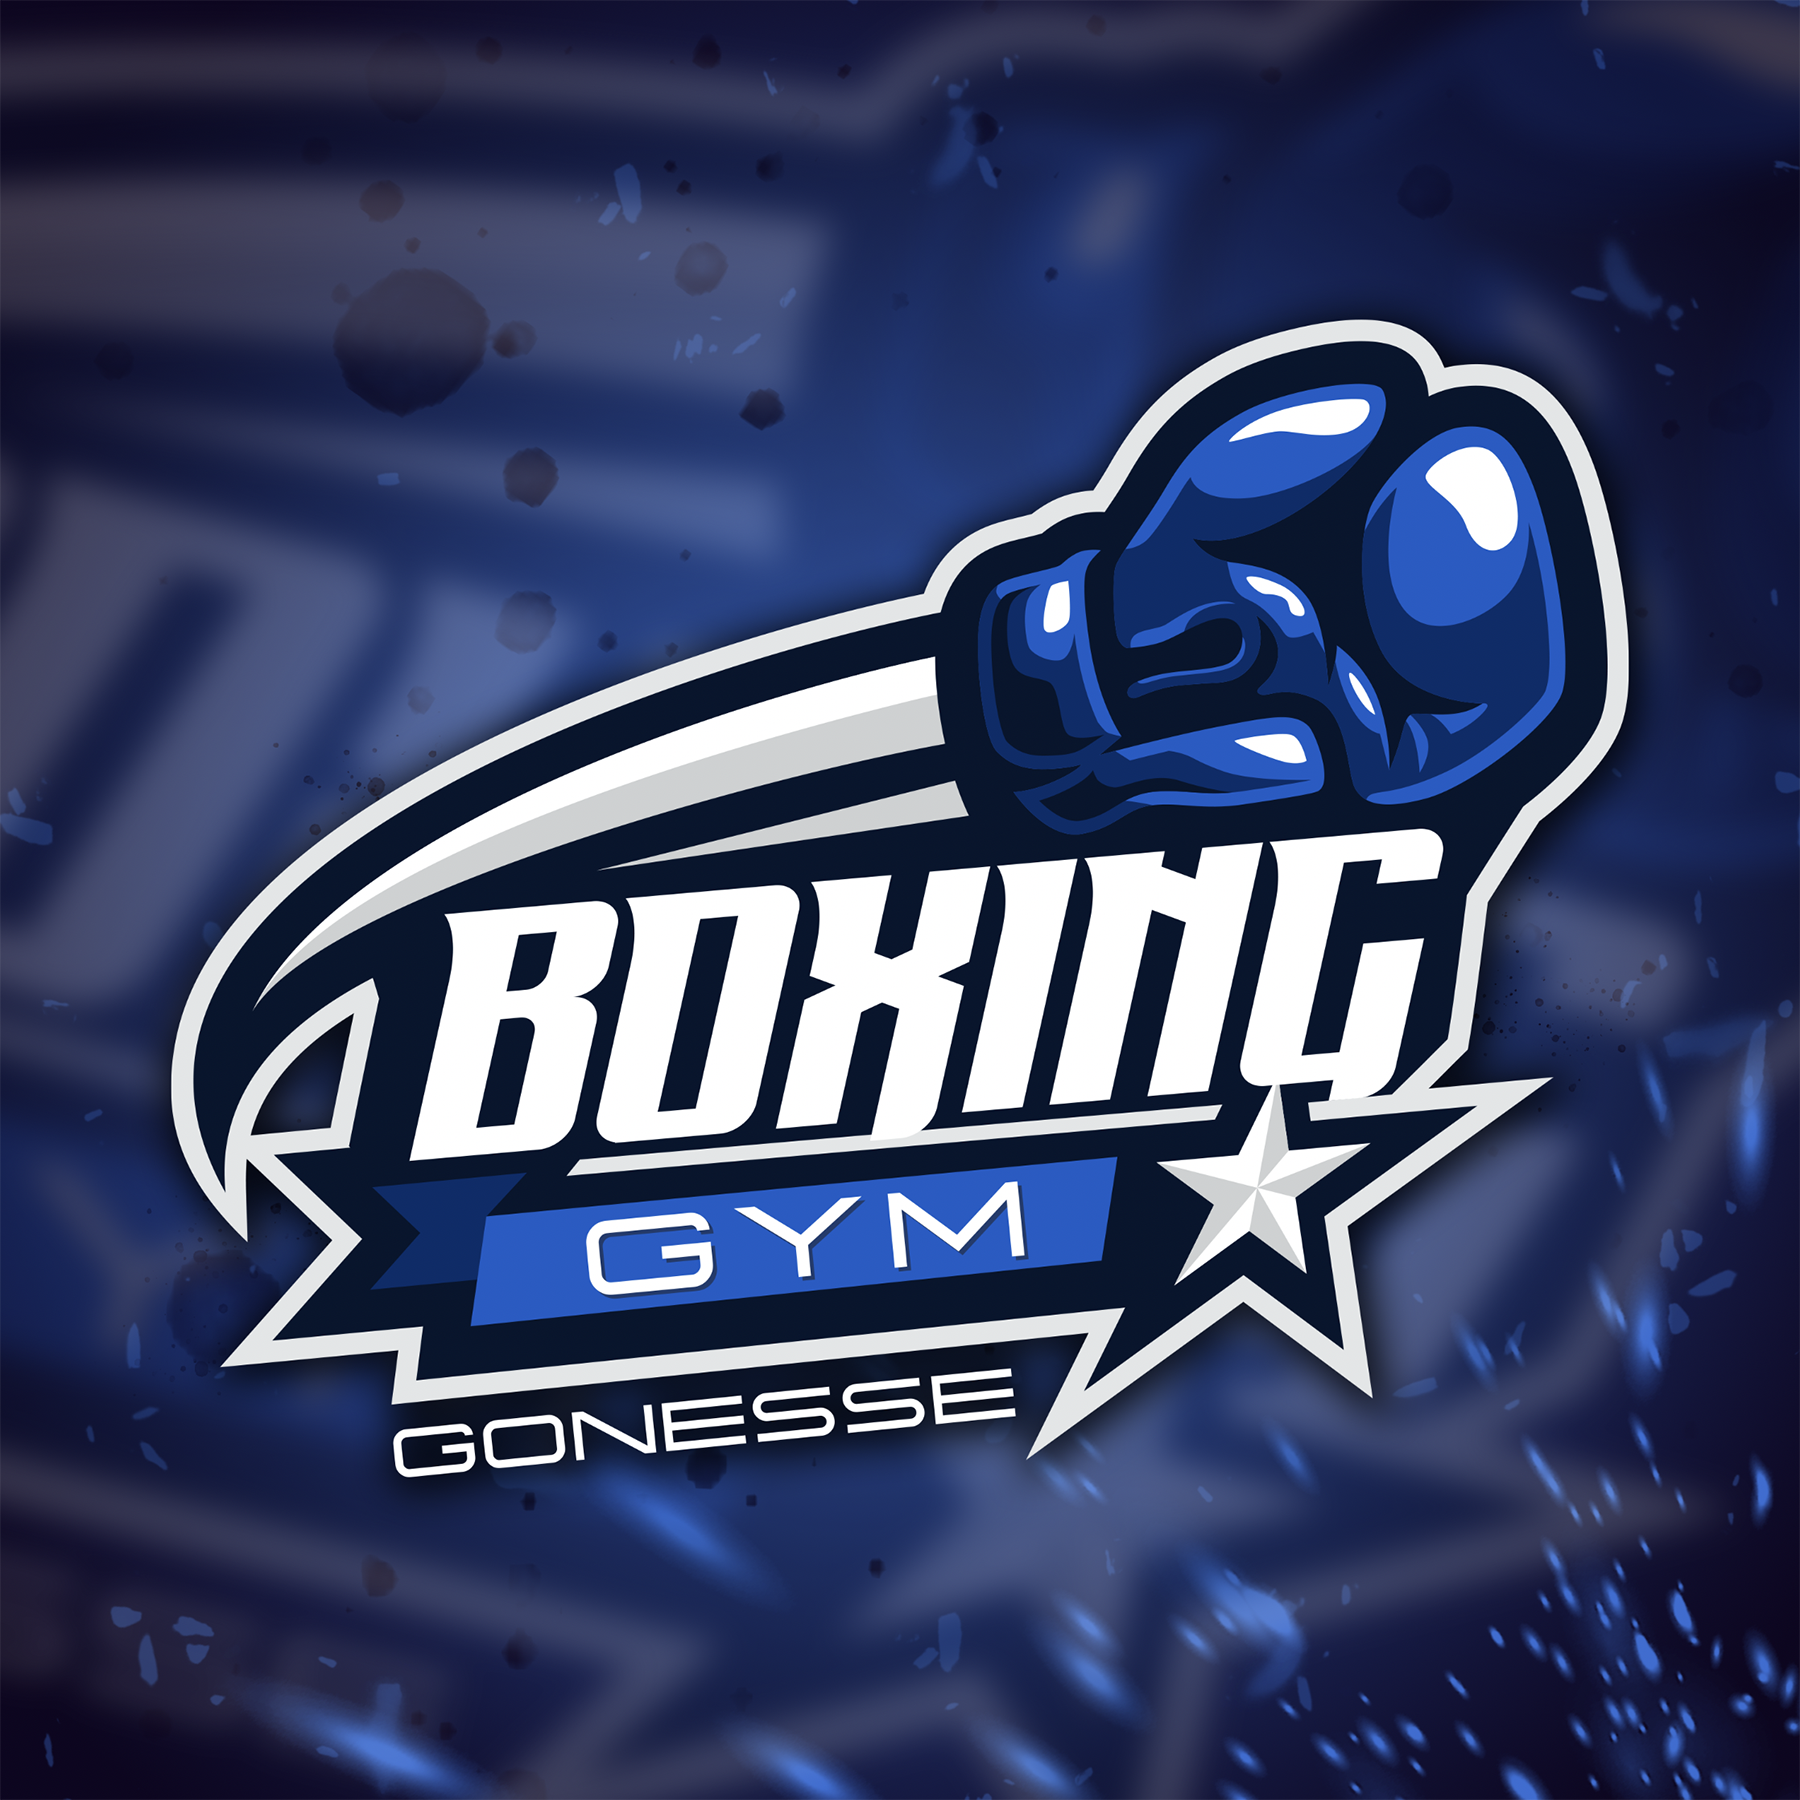 Logo boxe gym gonesse